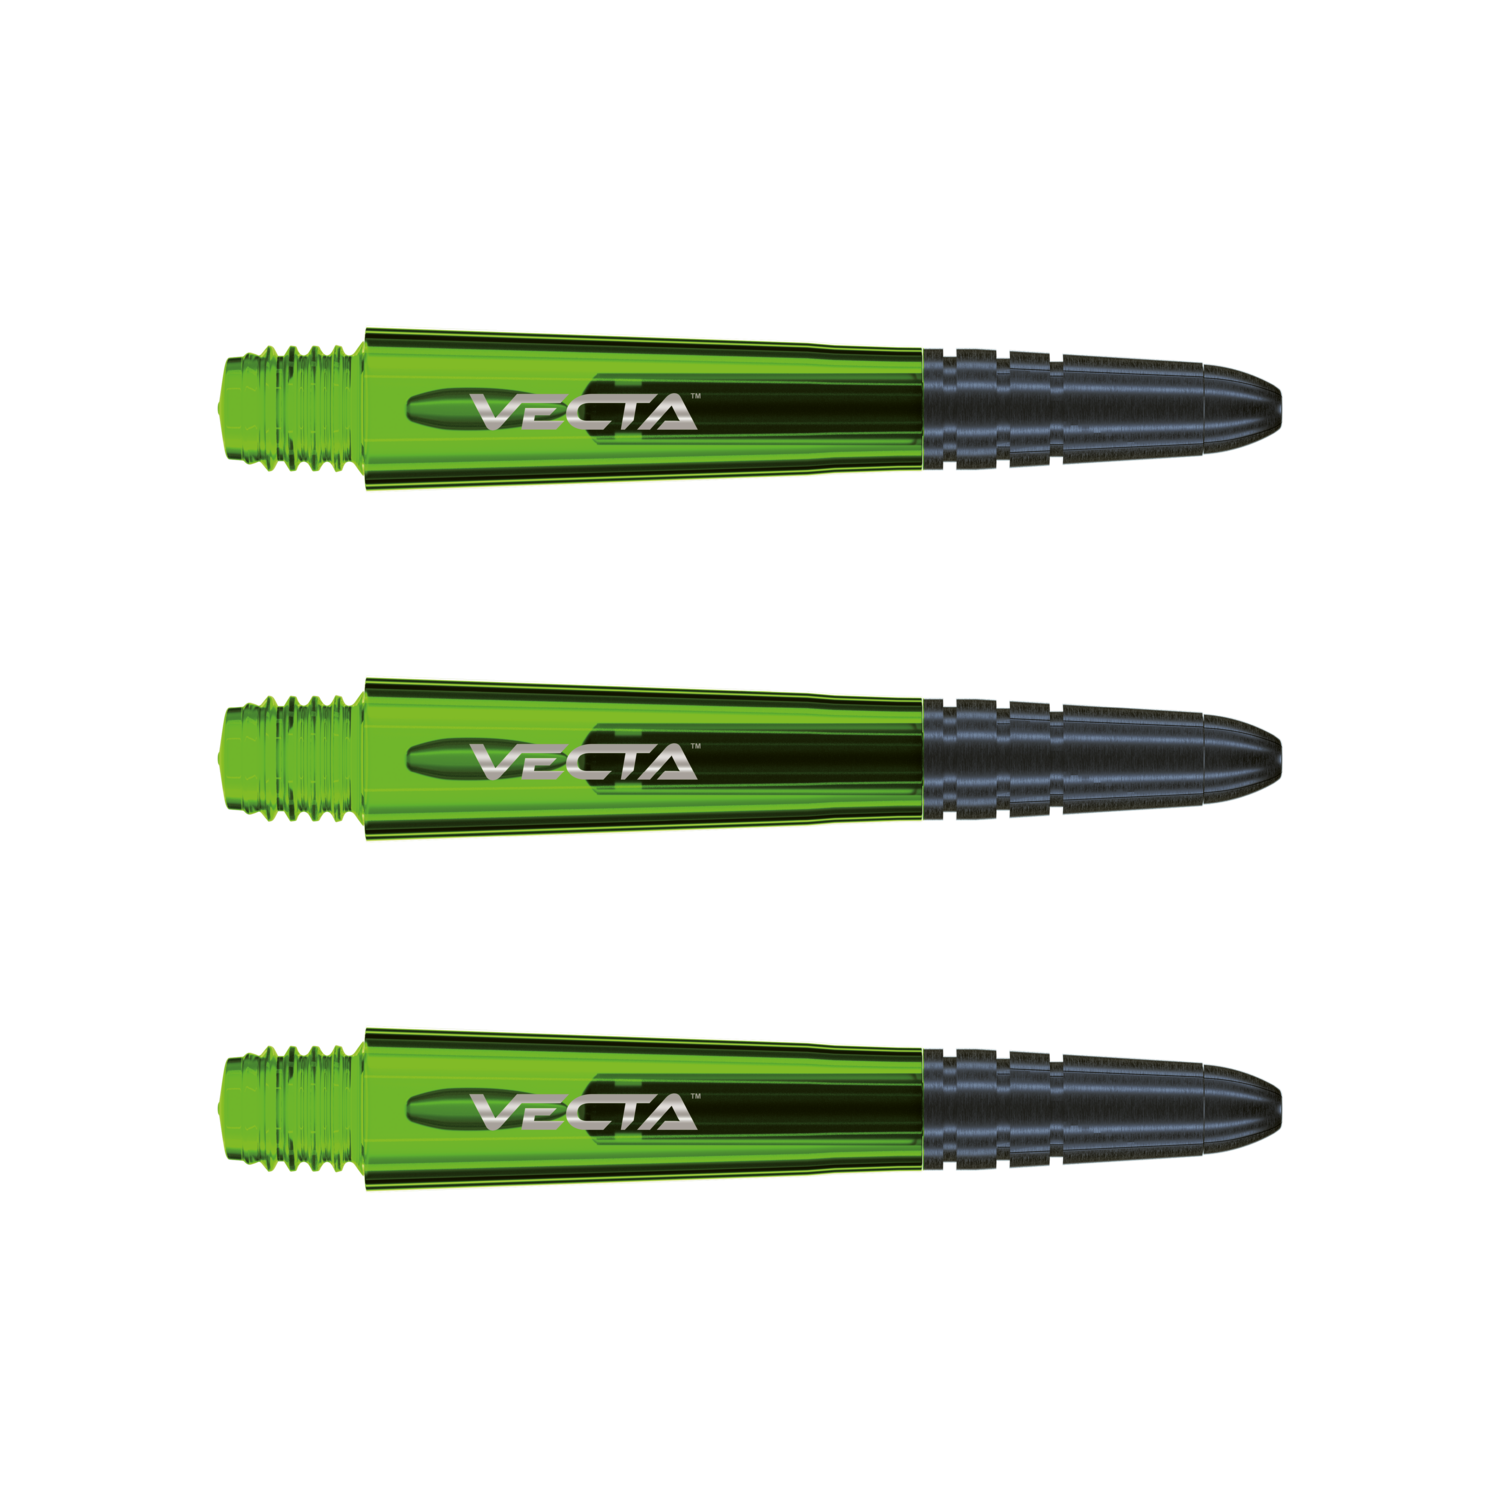 Vecta short green shafts